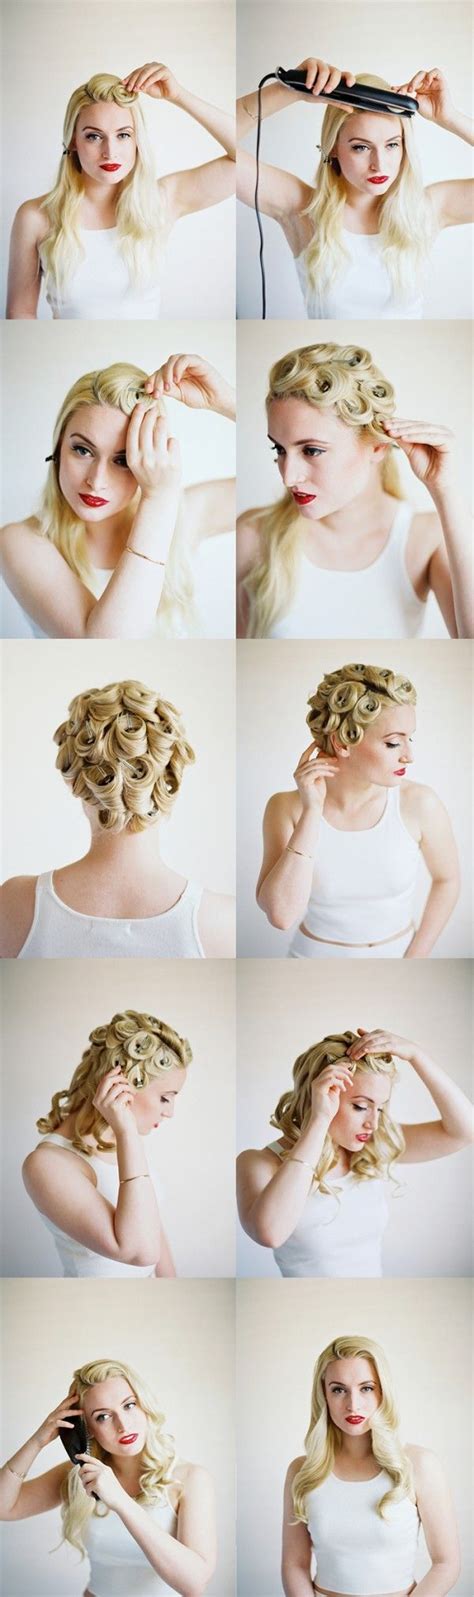 Diy Modern Pin Curls Tutorial For The Bride Weddinghairstyles